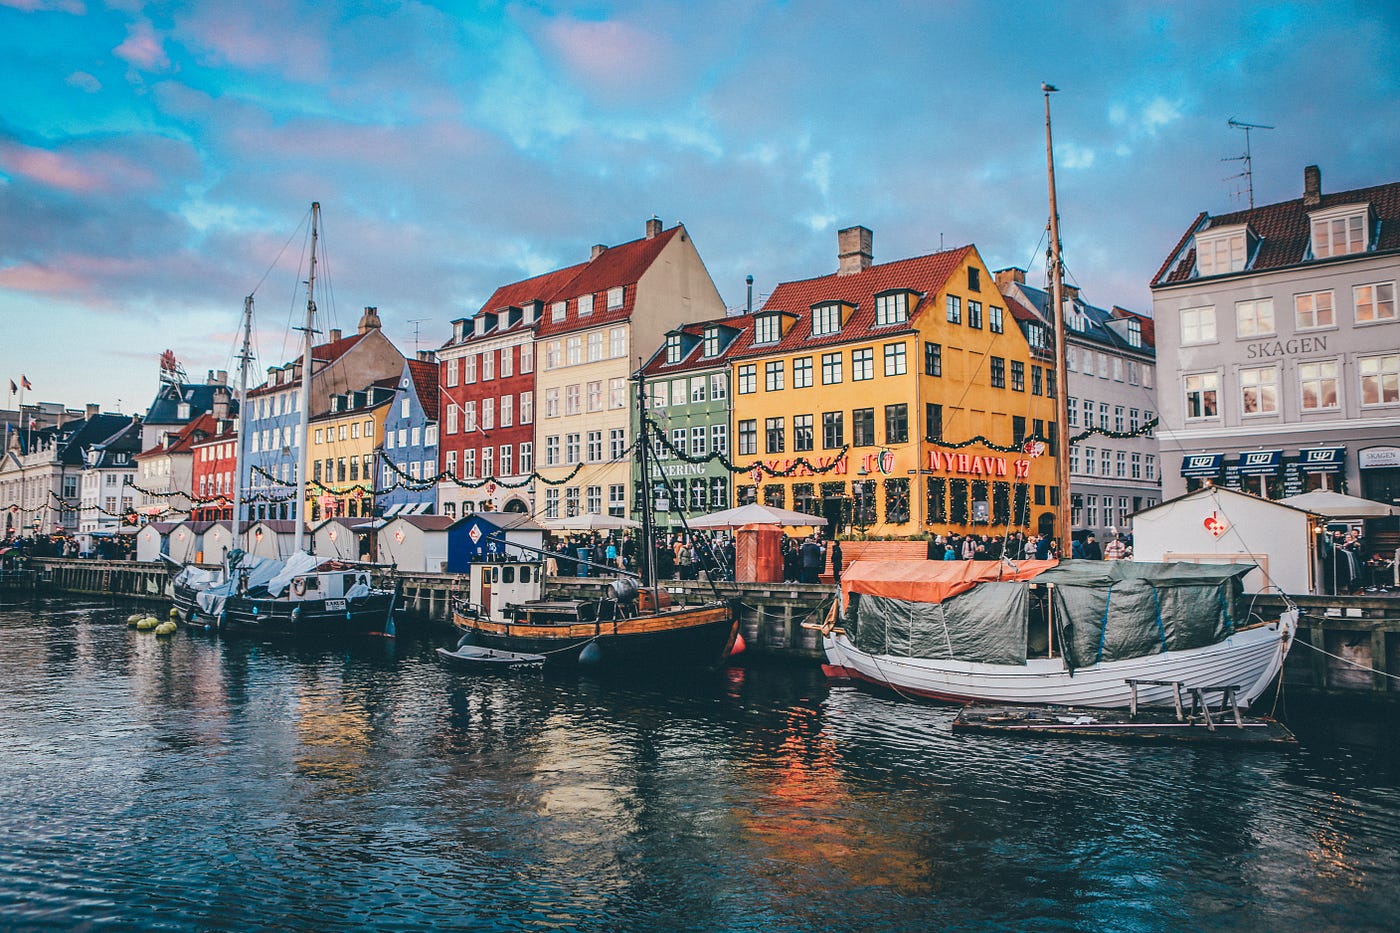 Wallpaper* City Guide to Copenhagen